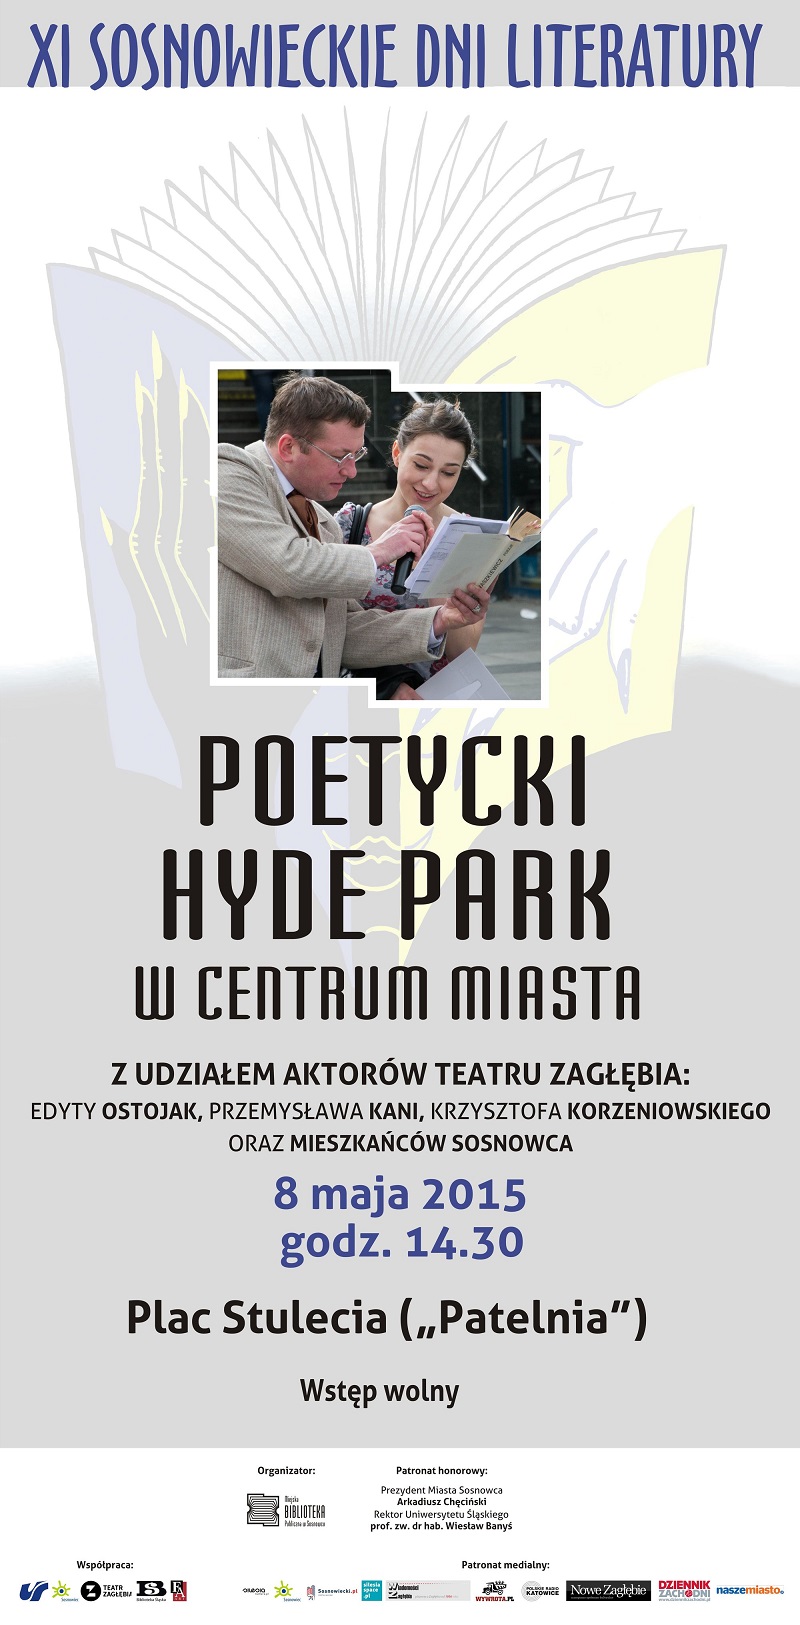 Poetycki Hyde Park